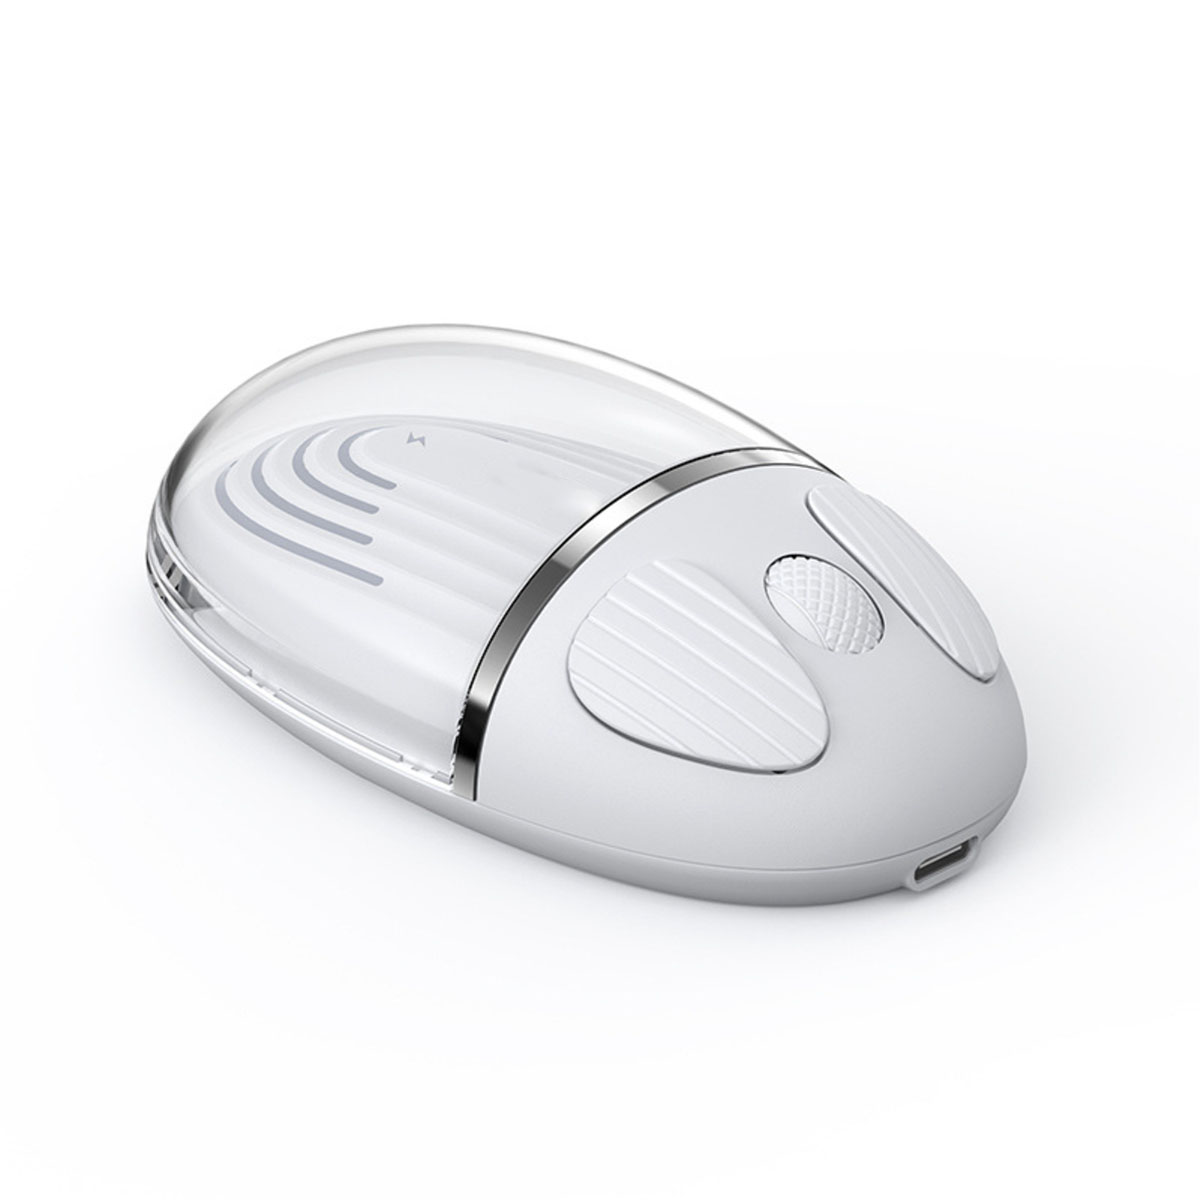 Transparente kabellose Maus Leise Mode Maus, Maus Dual weiß Bunte Bluetooth BYTELIKE Licht